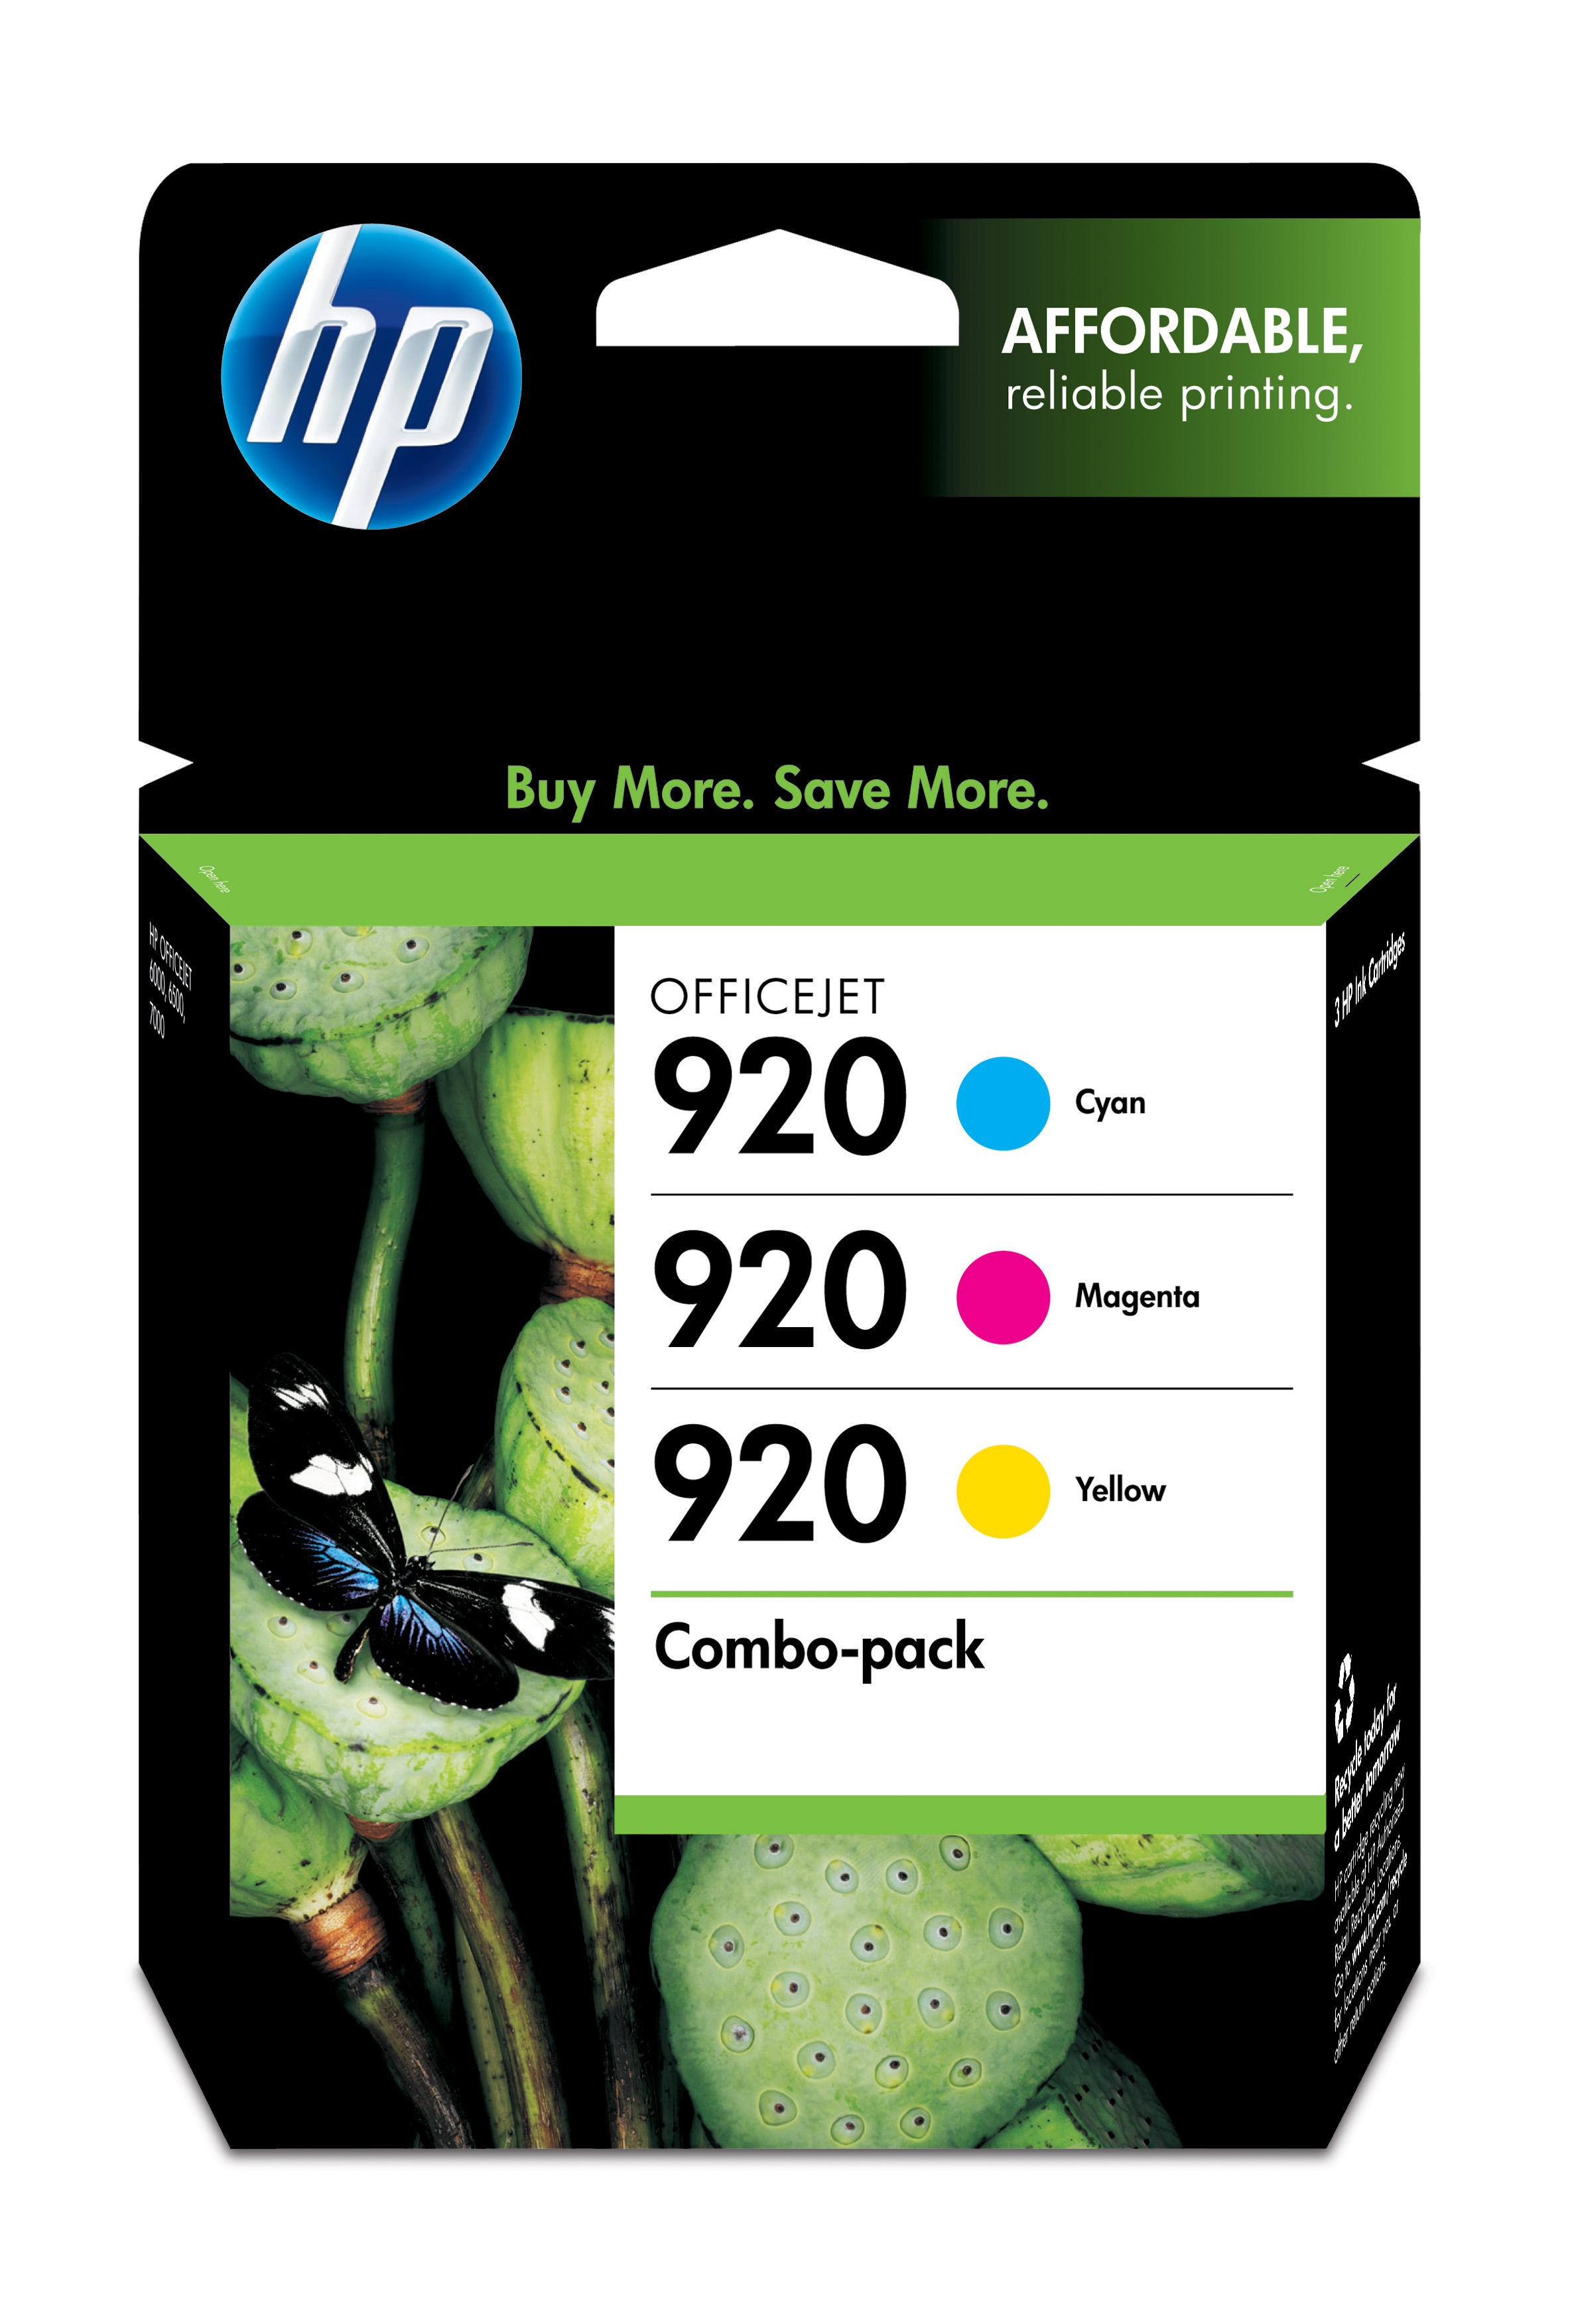 HP 920 Combo-pack Cyan/Magenta/Yellow Officejet Ink Cartridges Genuine HP Inkjet